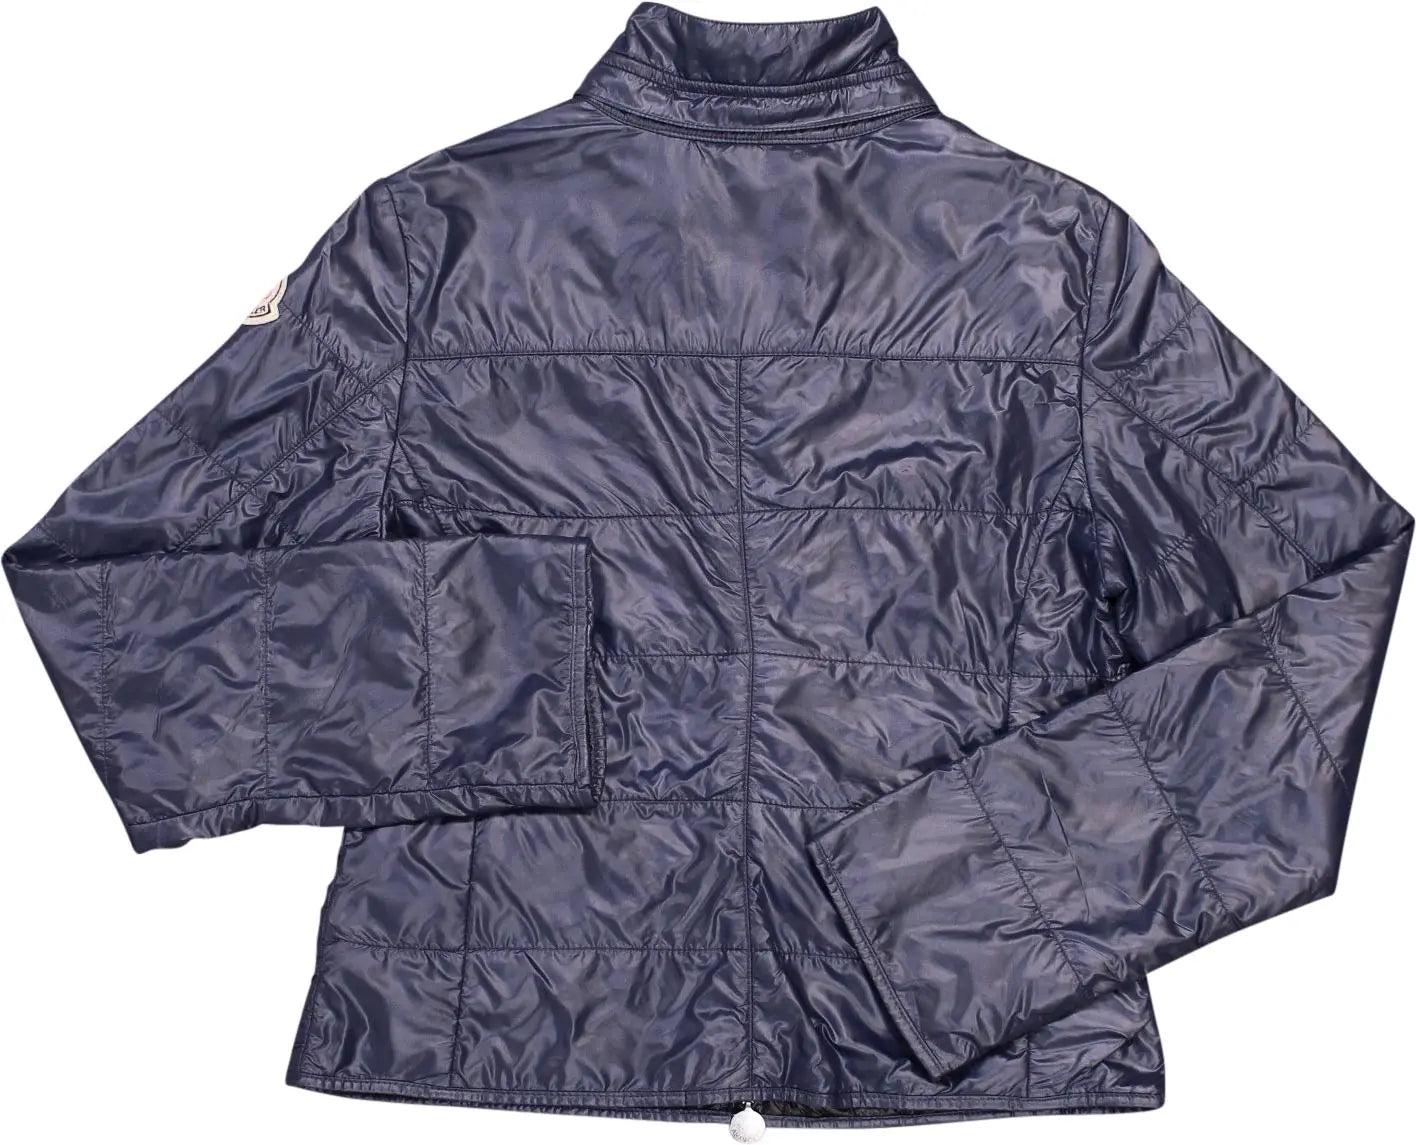 Moncler - Blue Moncler Jacket- ThriftTale.com - Vintage and second handclothing